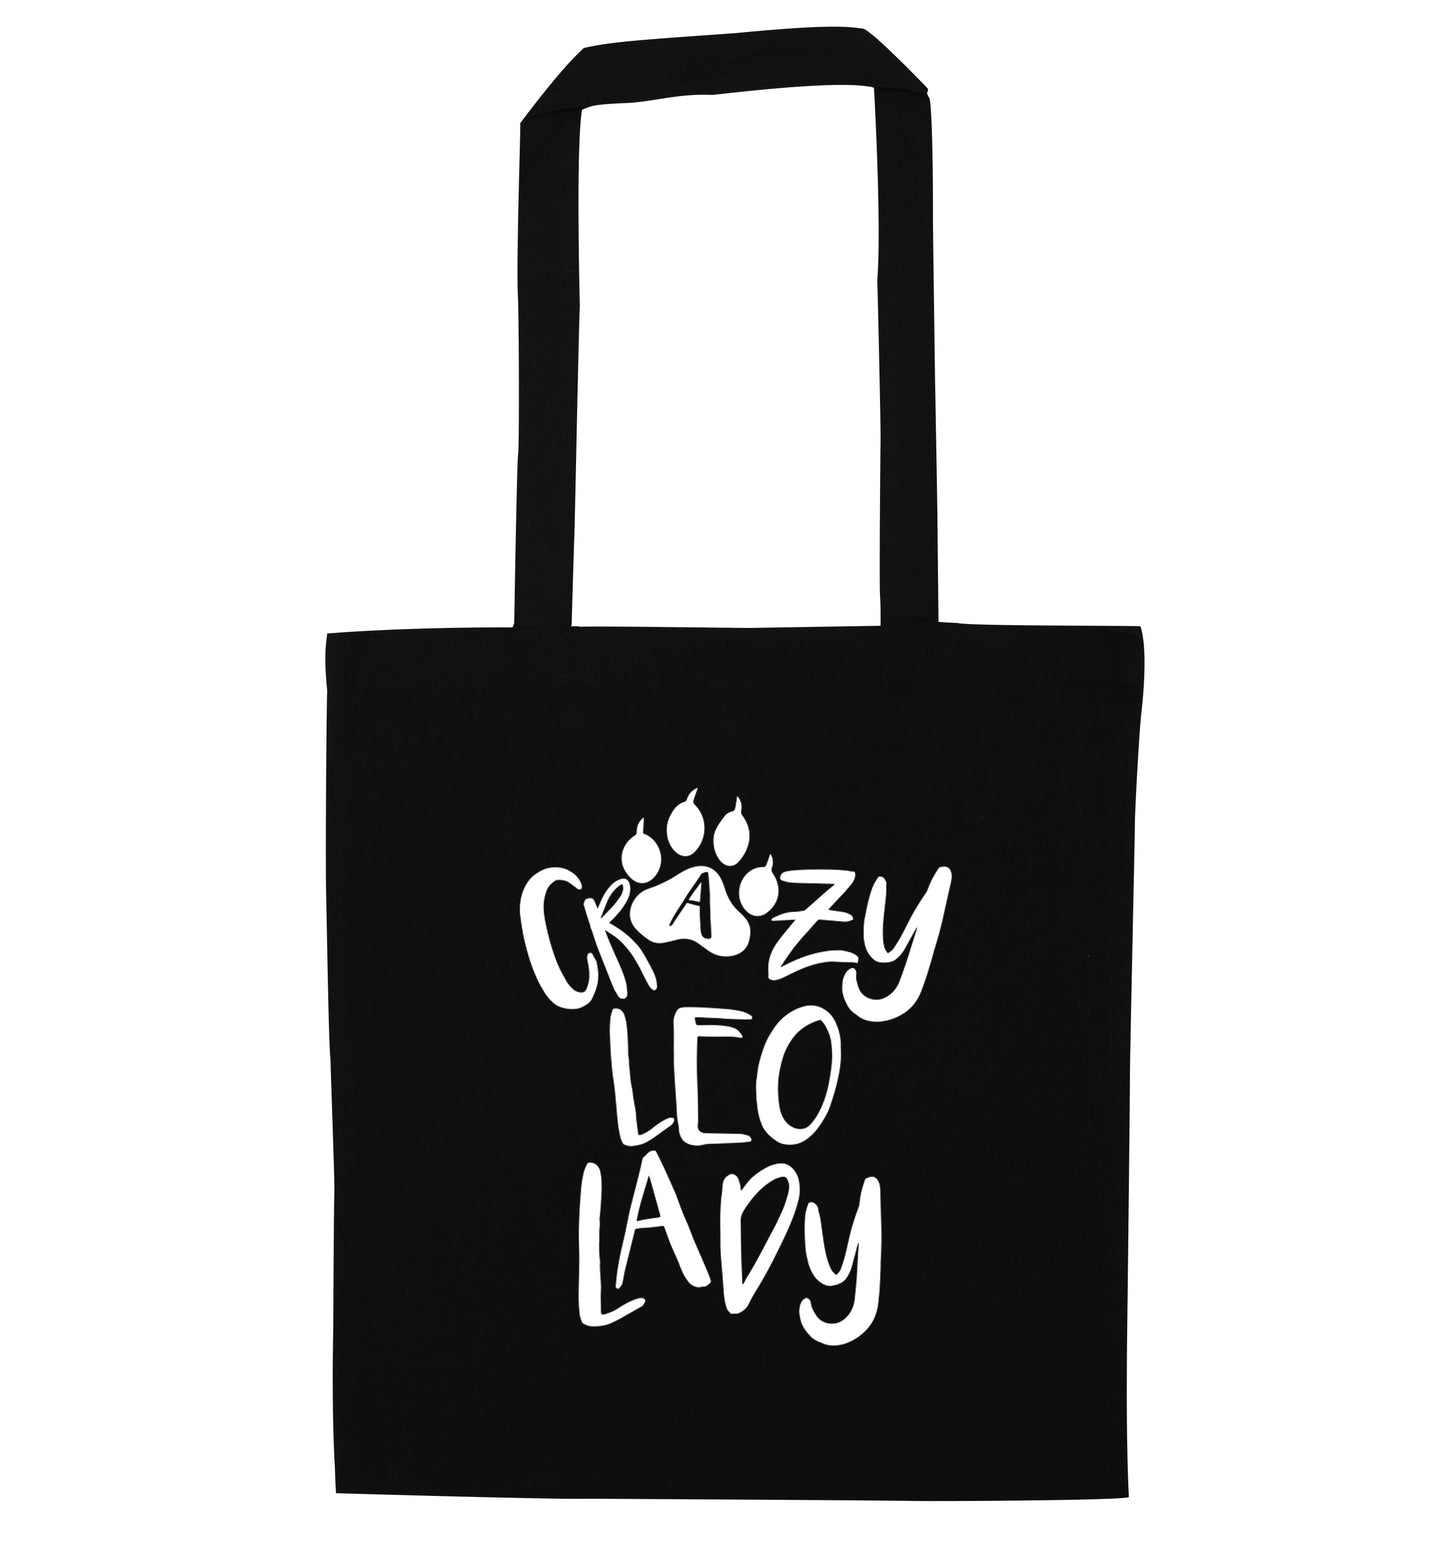 Crazy leo lady black tote bag